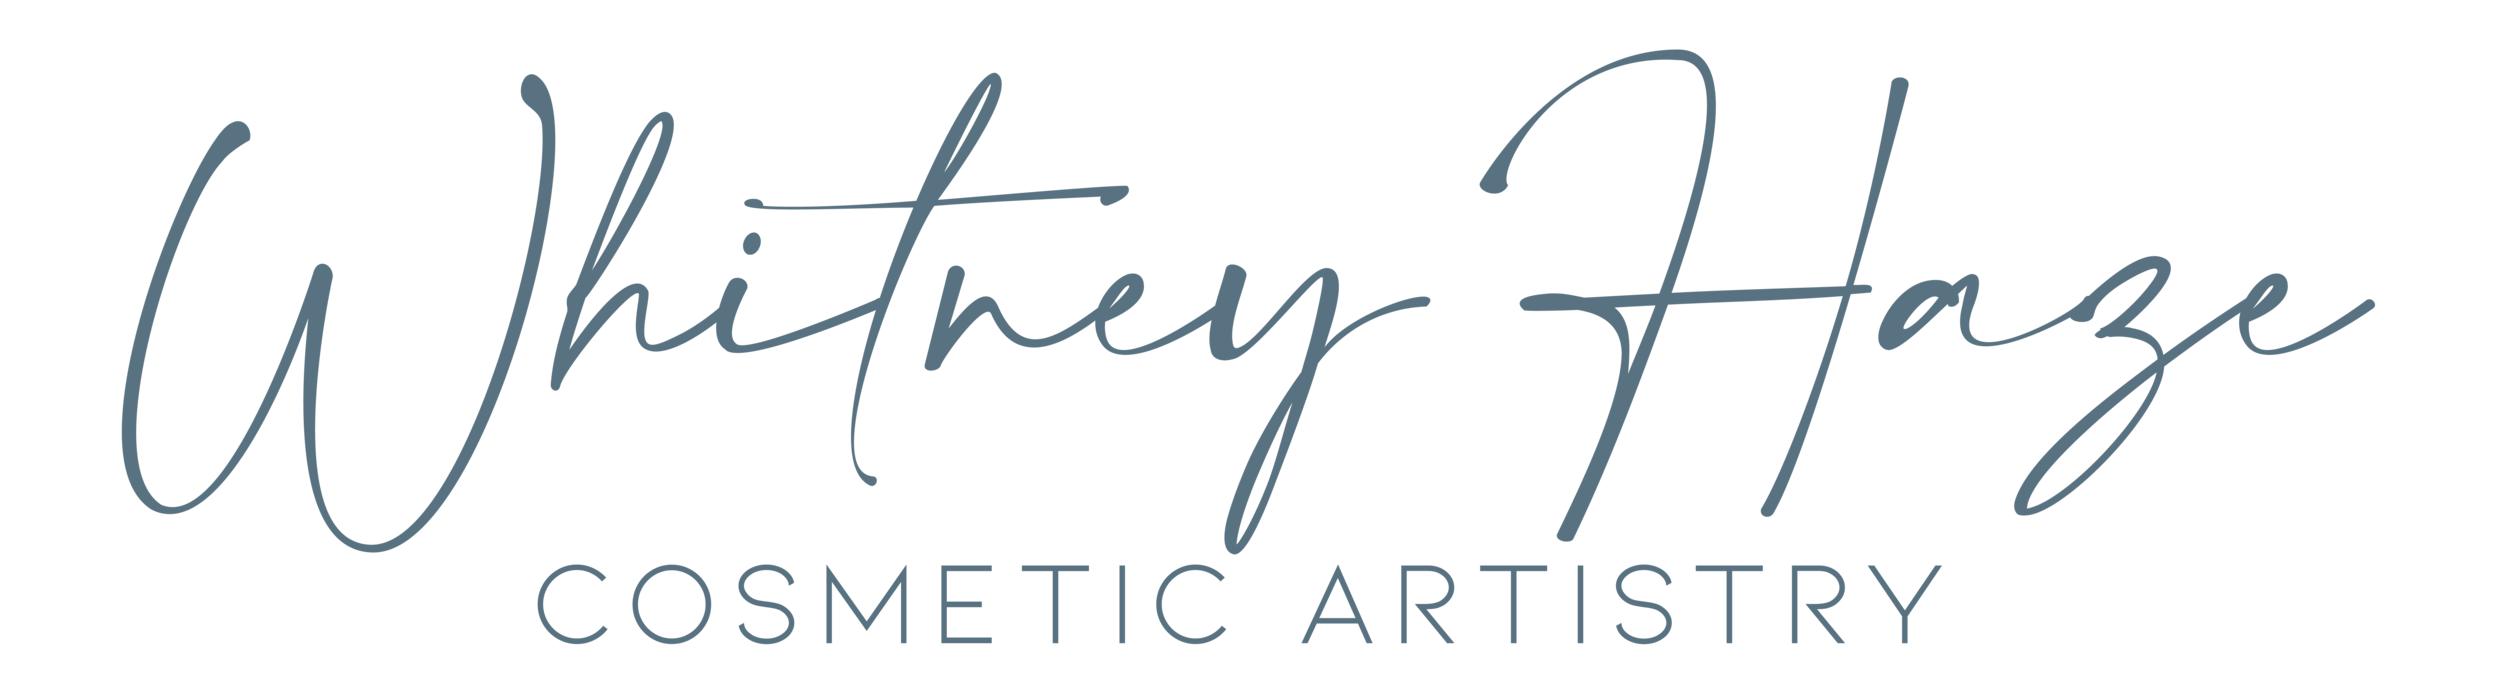 Whitney Haze - Cosmetic Artistry